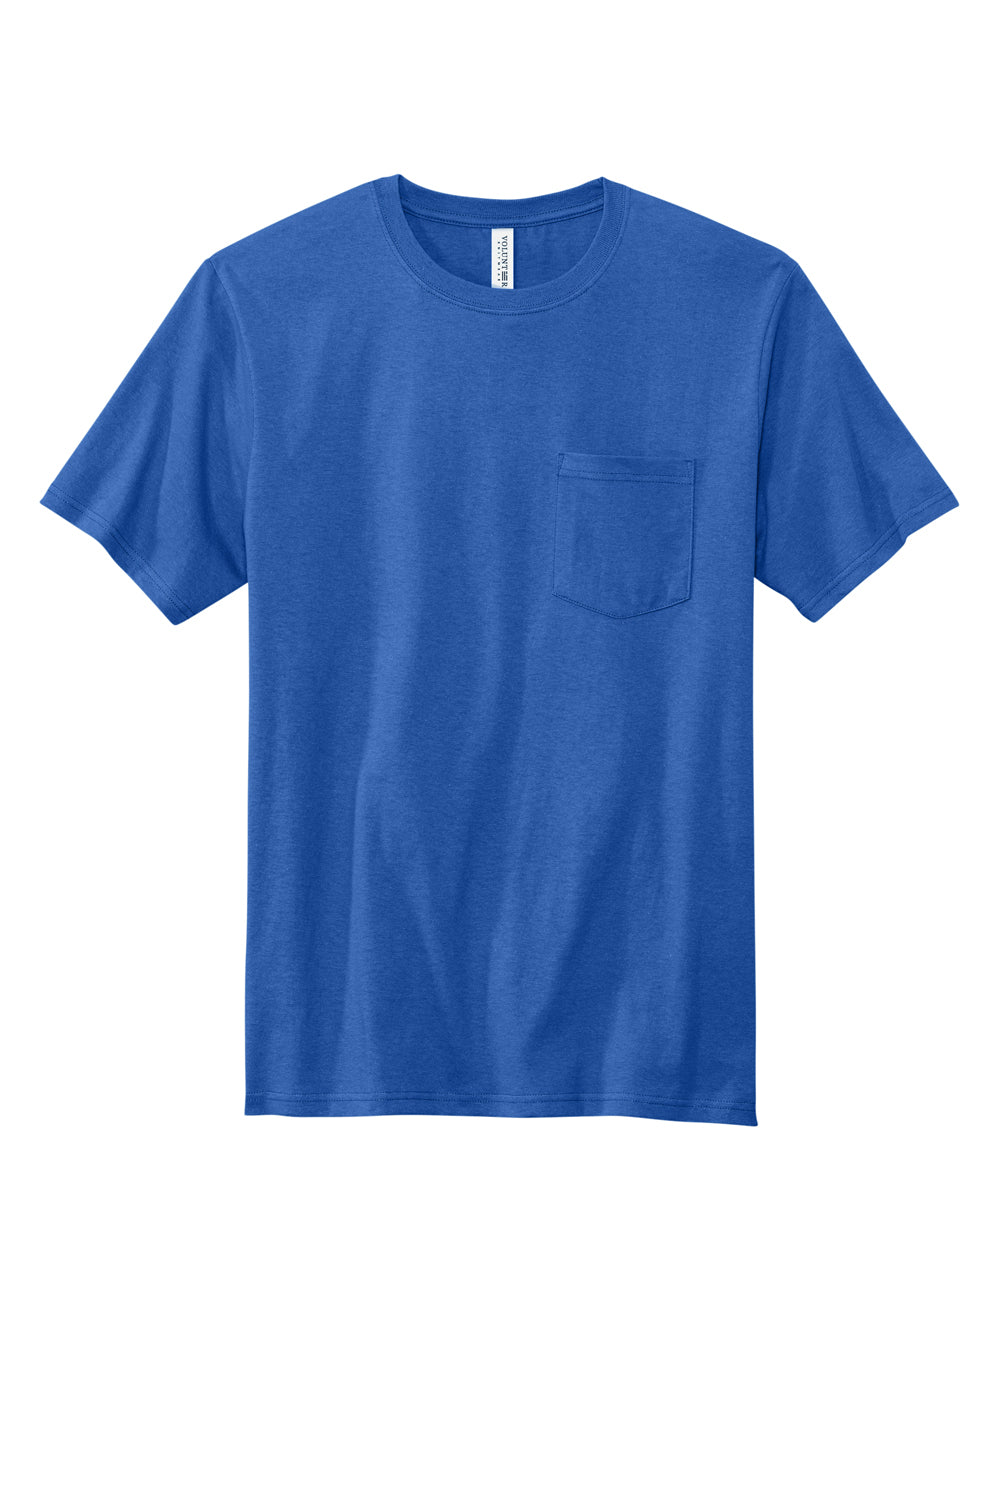 Volunteer Knitwear VL100P USA Made All American Short Sleeve Crewneck T-Shirt w/ Pocket True Royal Blue Flat Front